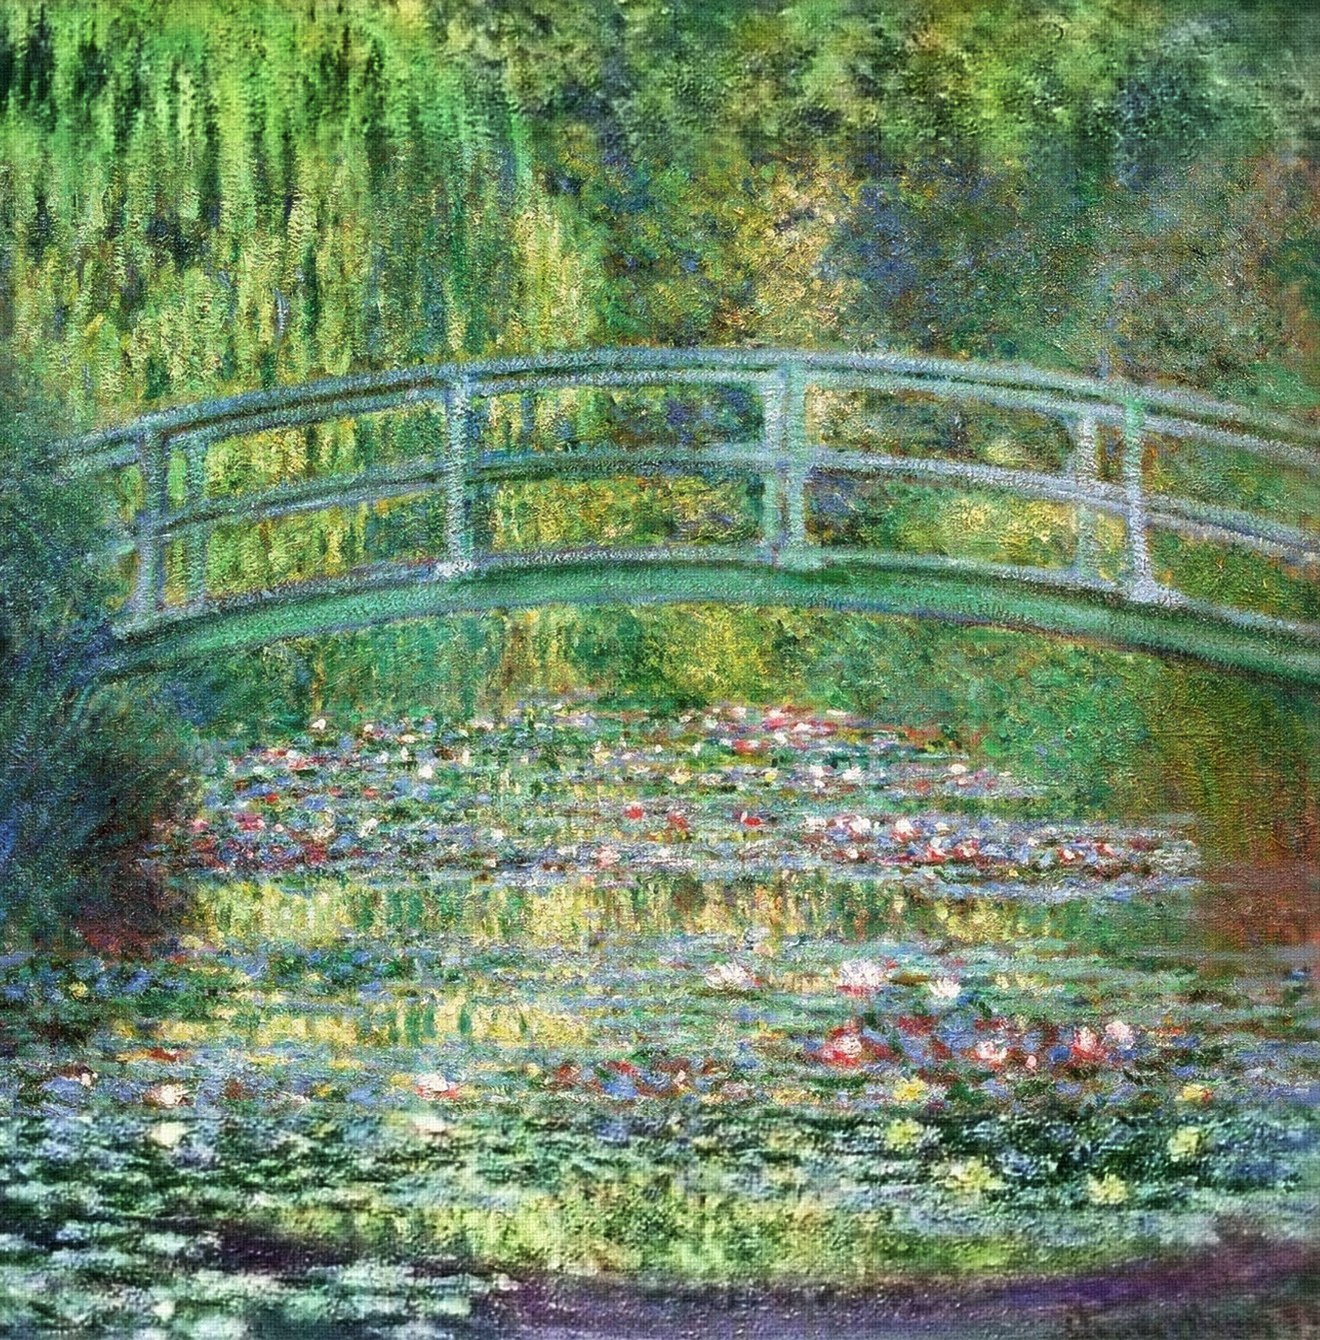 Claude+Monet-1840-1926 (400).jpg